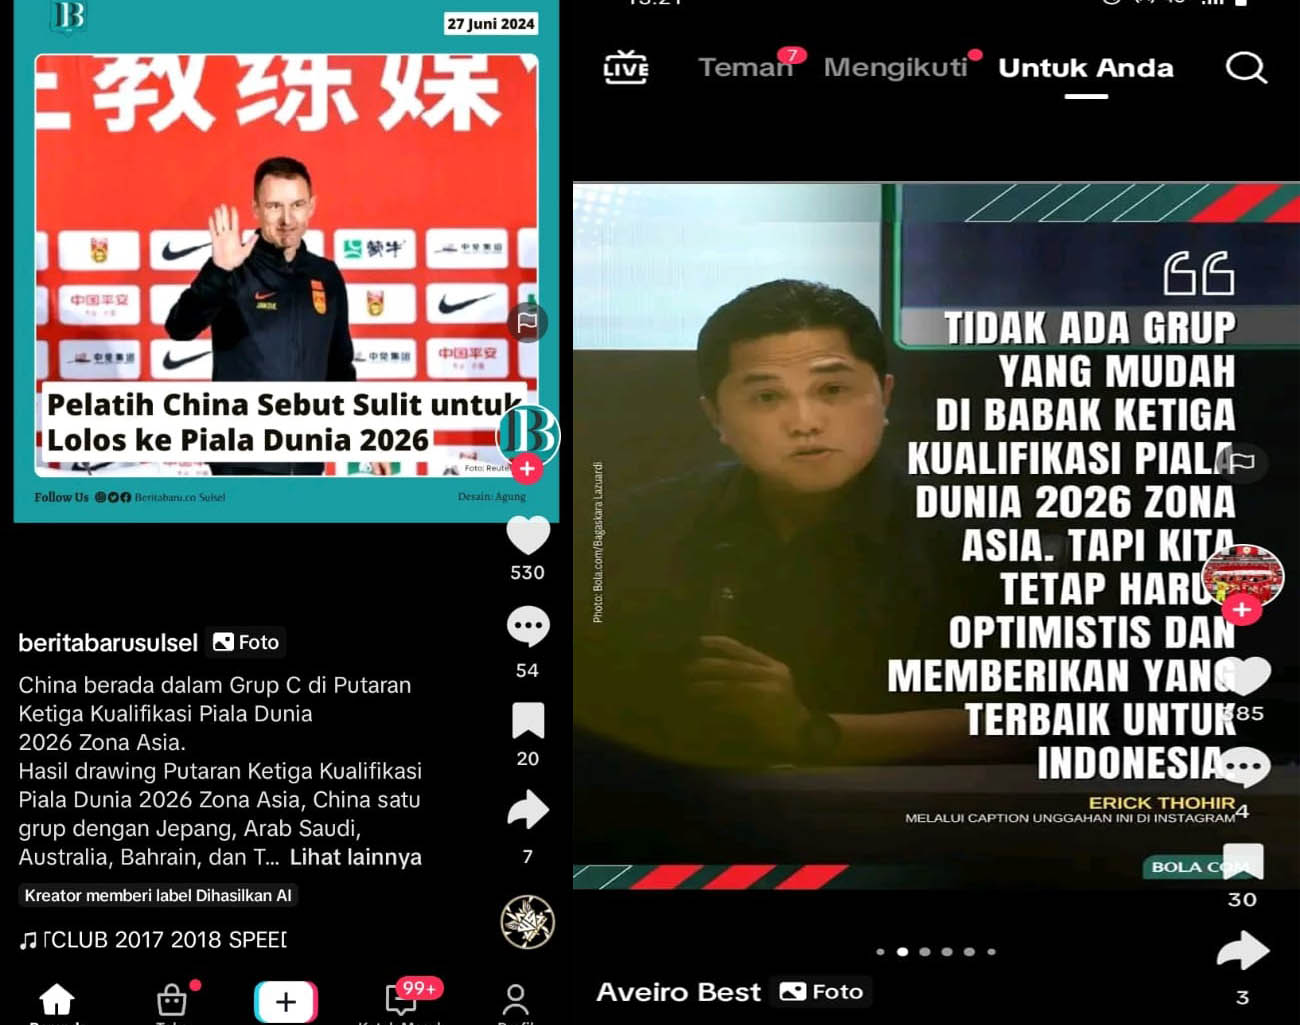 Pelatih Cina Pesimis Lolos Piala Dunia, Erick Thohir Yakin Kejutan Indonesia, Kualifikasi Piala Dunia 2026